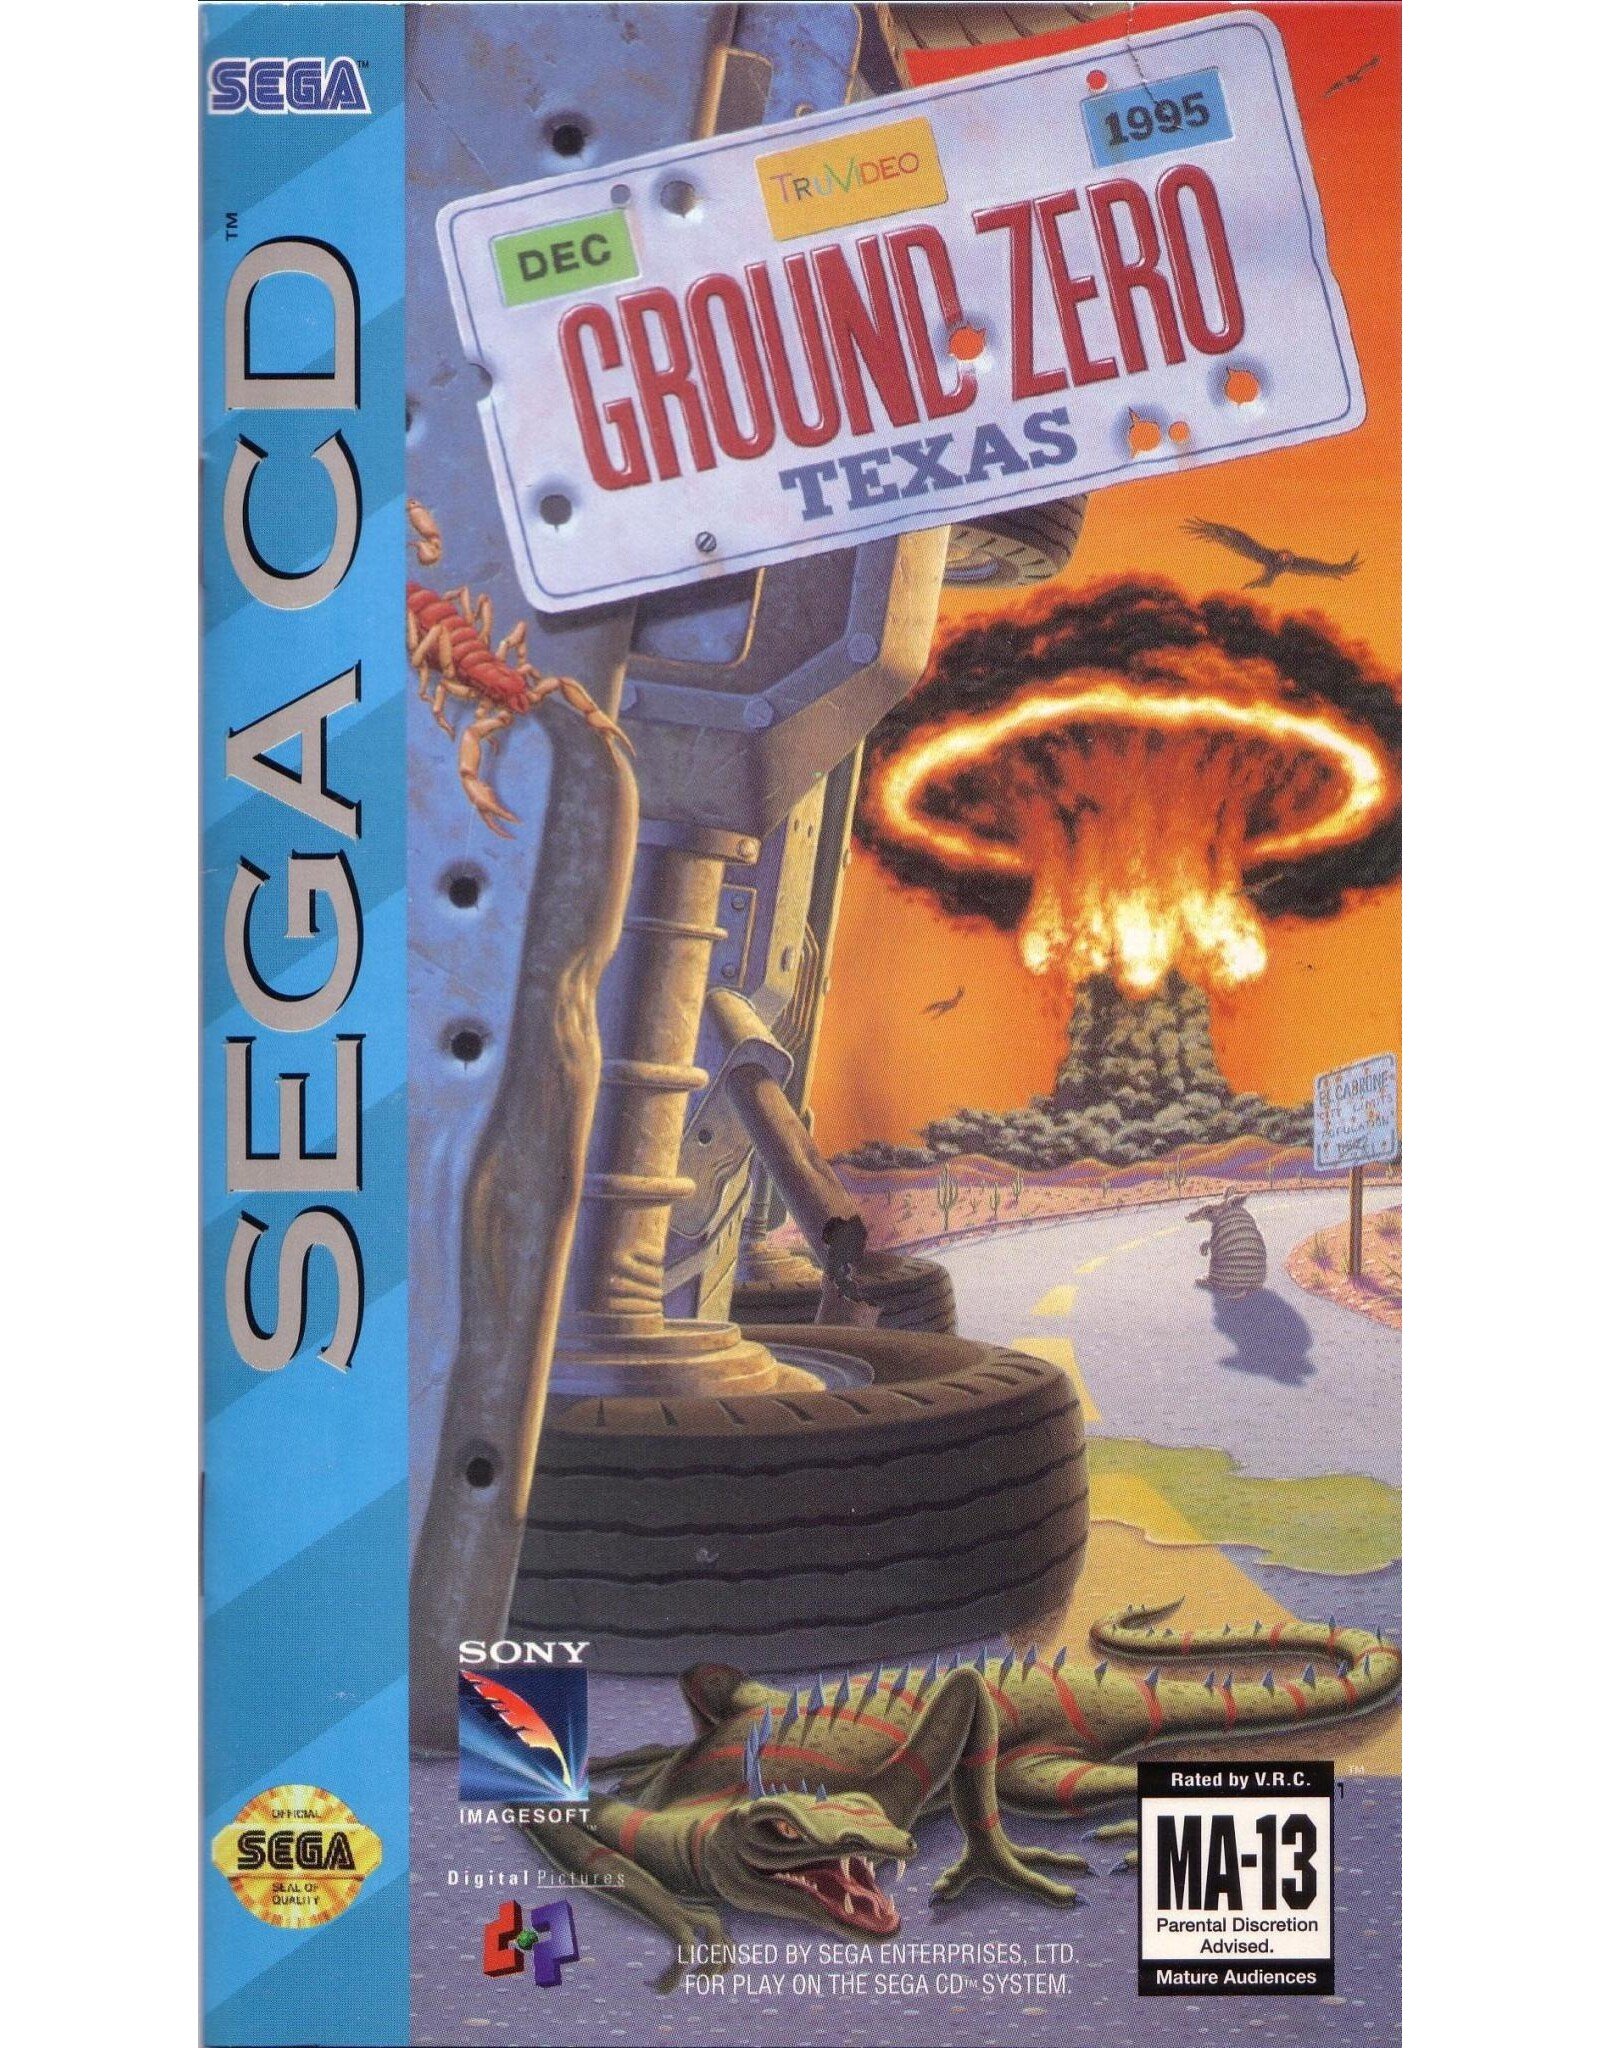 Sega CD Ground Zero Texas (CiB with OEM Second Disc Tray)